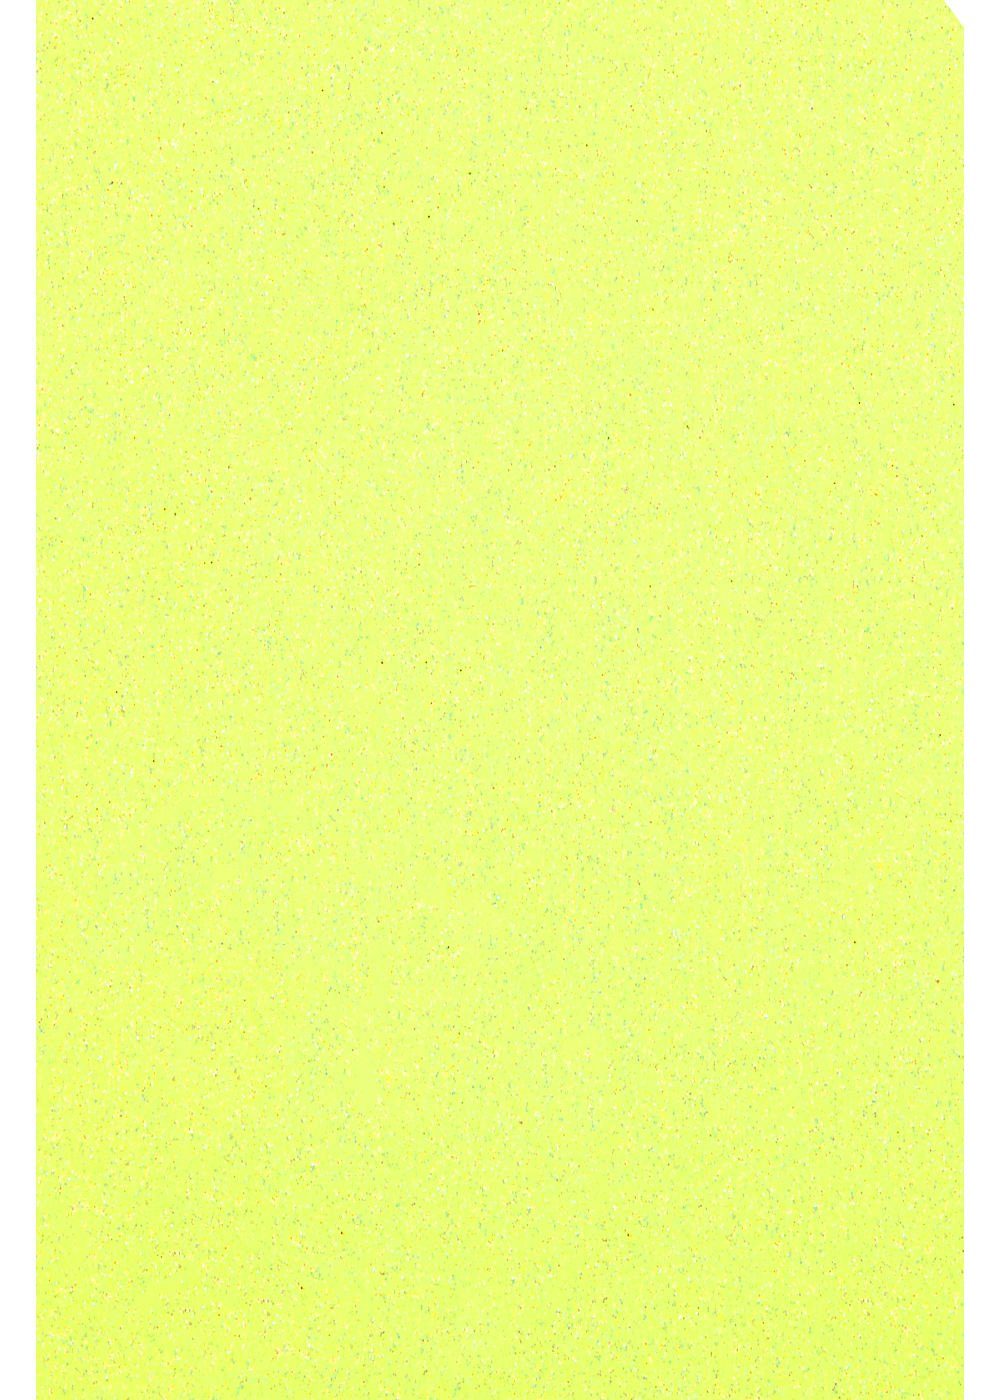 Hilltop Transparentpapier Glitzer Transferfolie/Textilfolie zum Aufbügeln, perfekt zum Plottern Neon Yellow